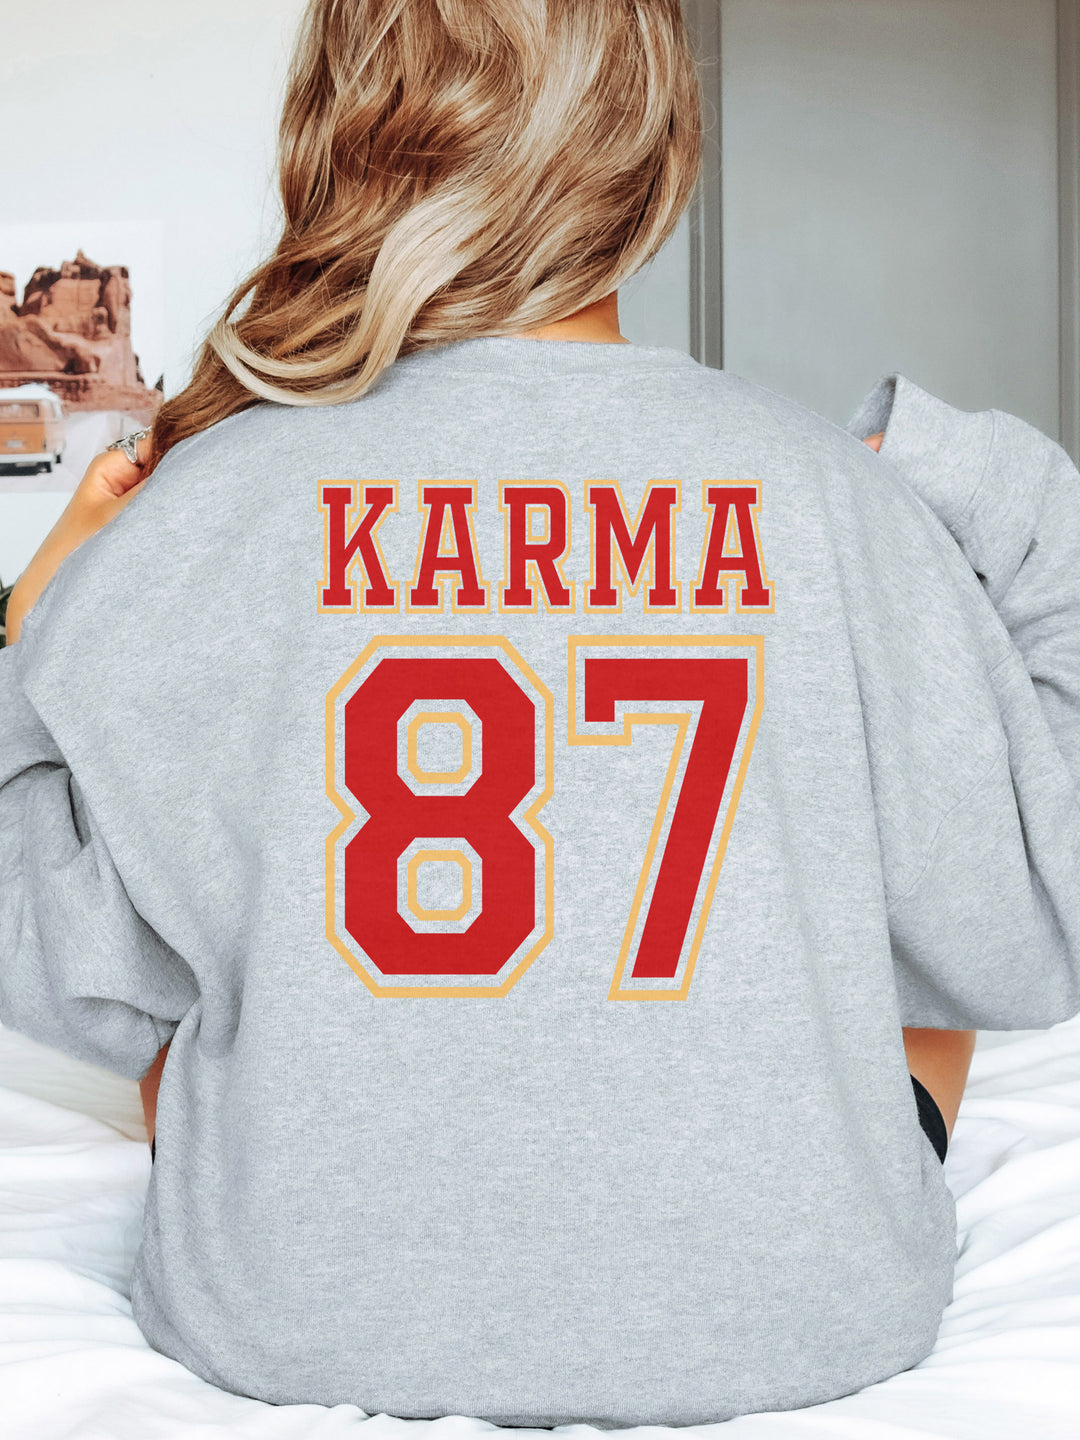 Karma 87 Graphic Sweater